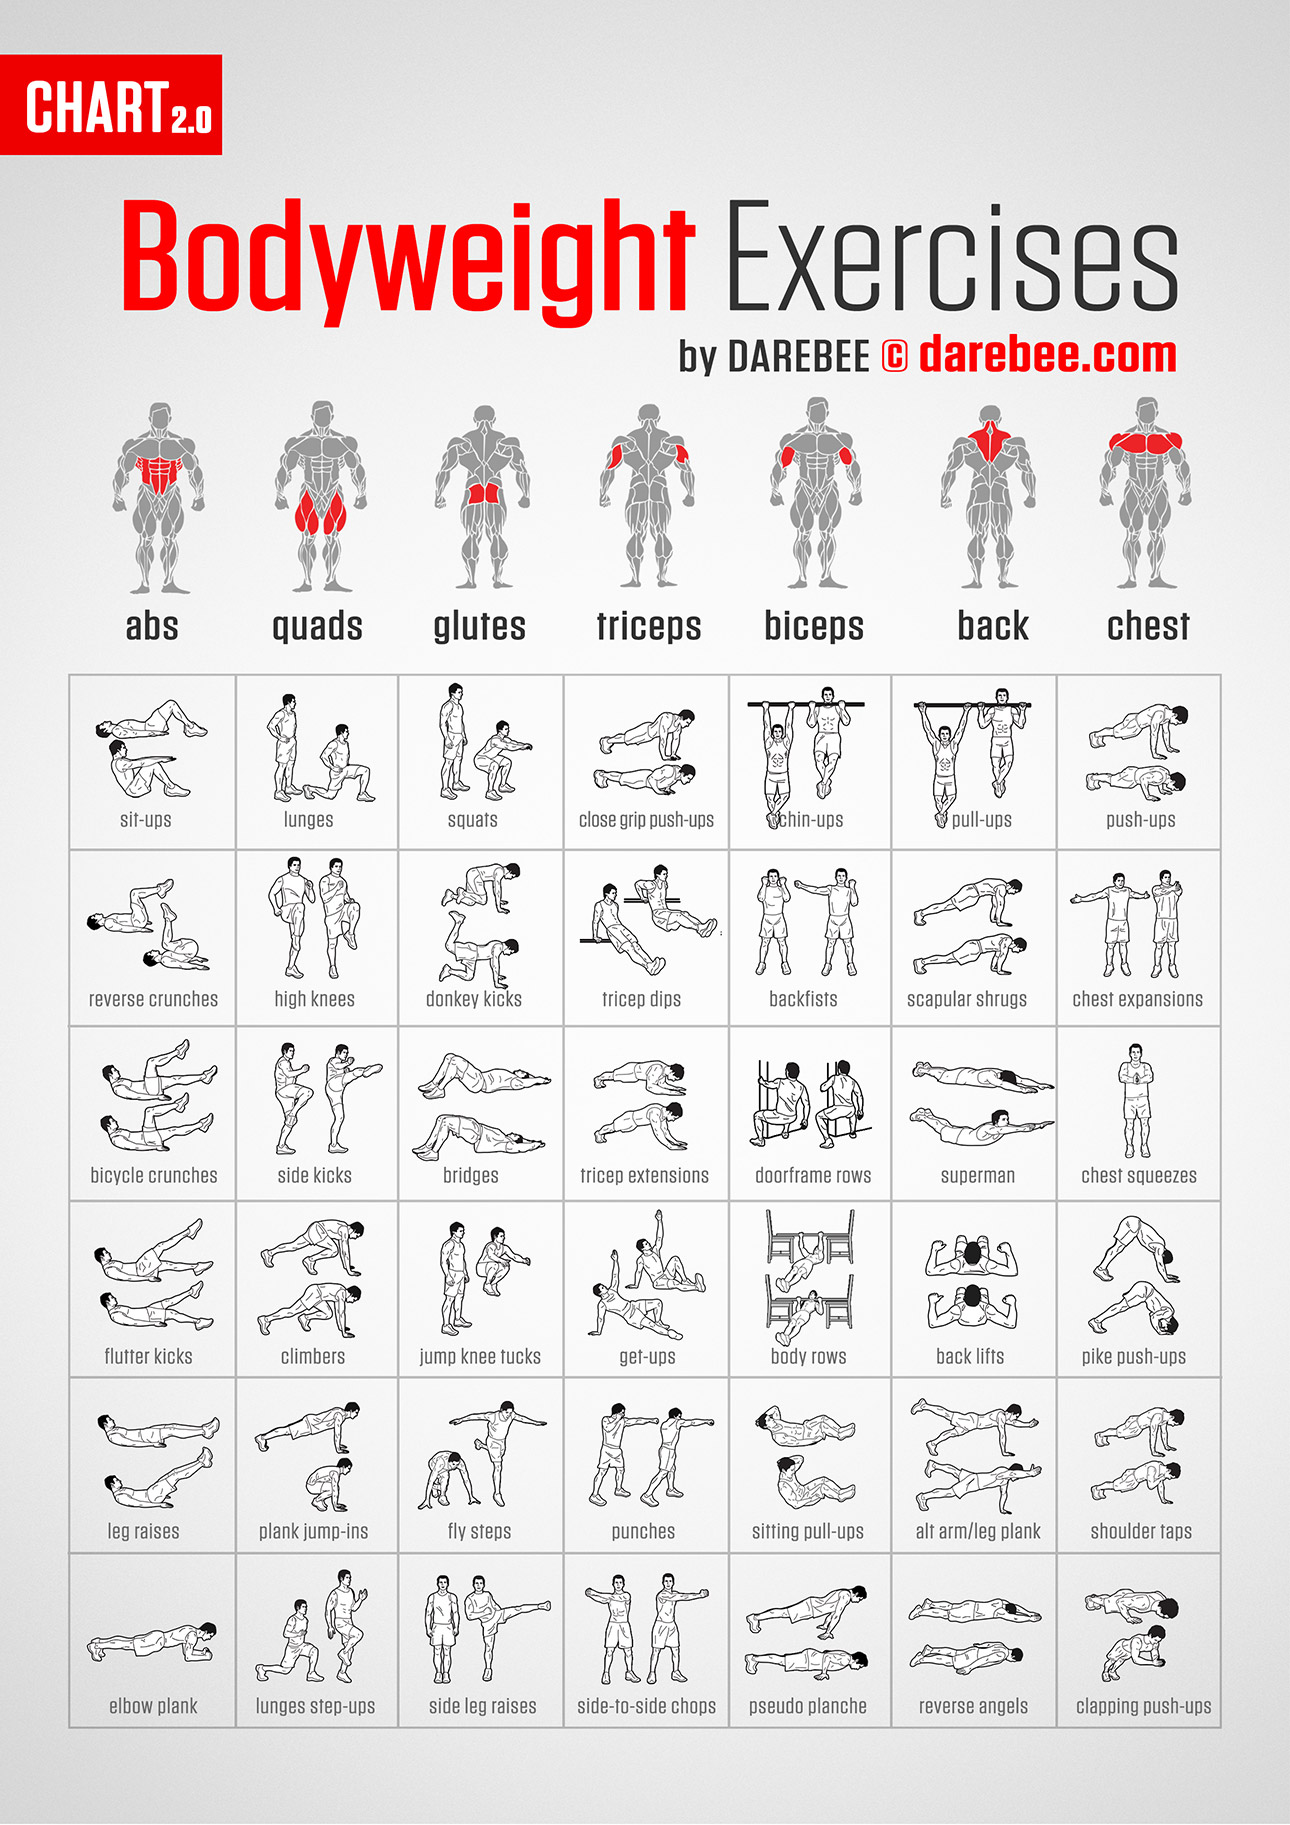 https://darebee.com/images/posters/bodyweight-exercises-chart.jpg